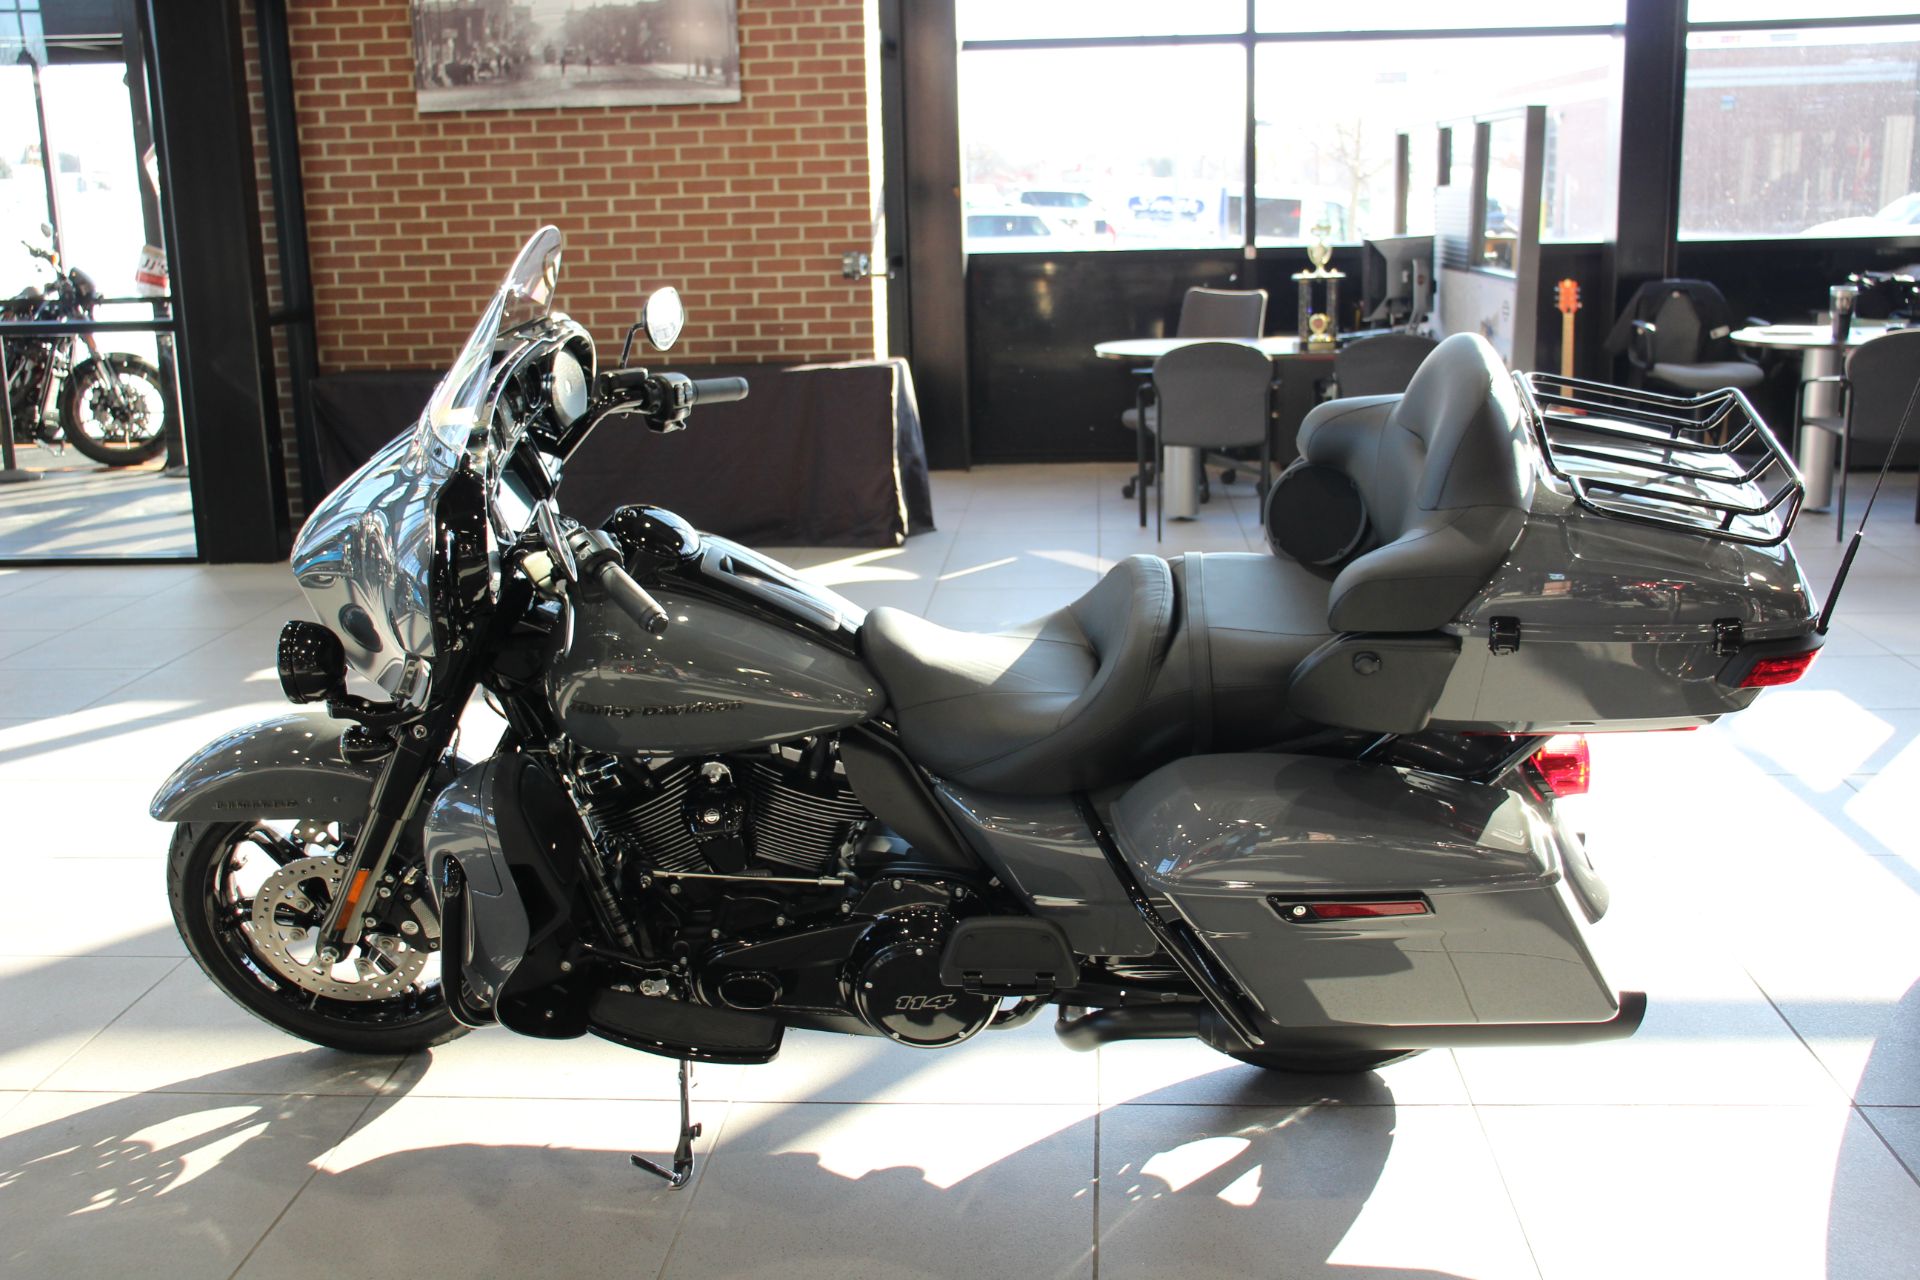 2022 Harley-Davidson Ultra Limited in Flint, Michigan - Photo 7